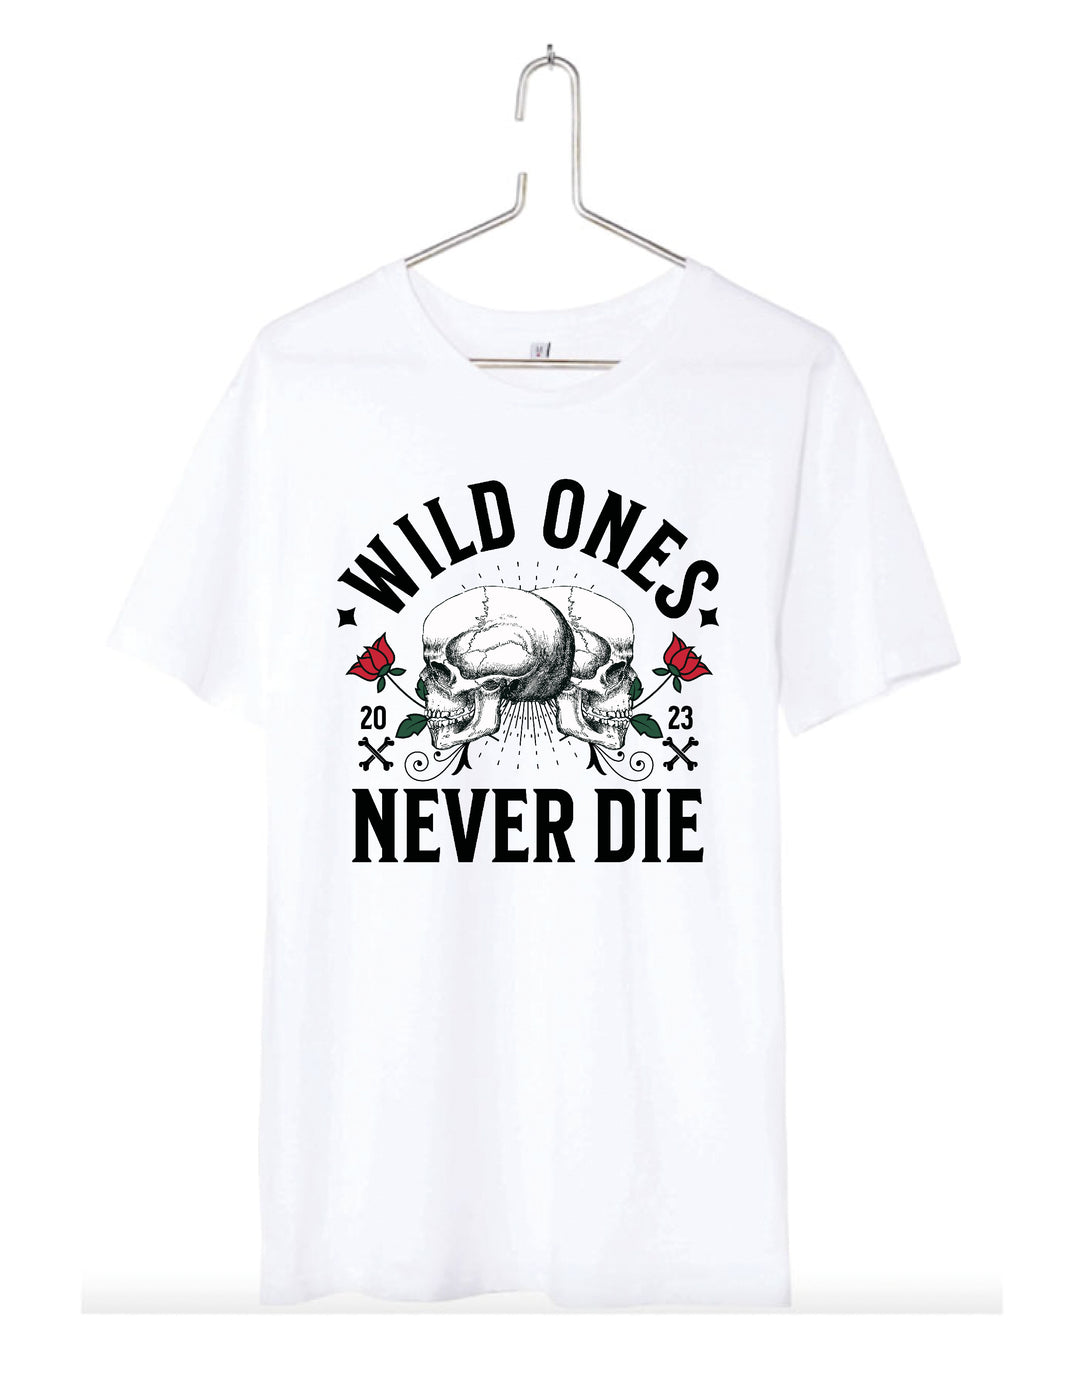 T-Shirt homme Wild ones never die